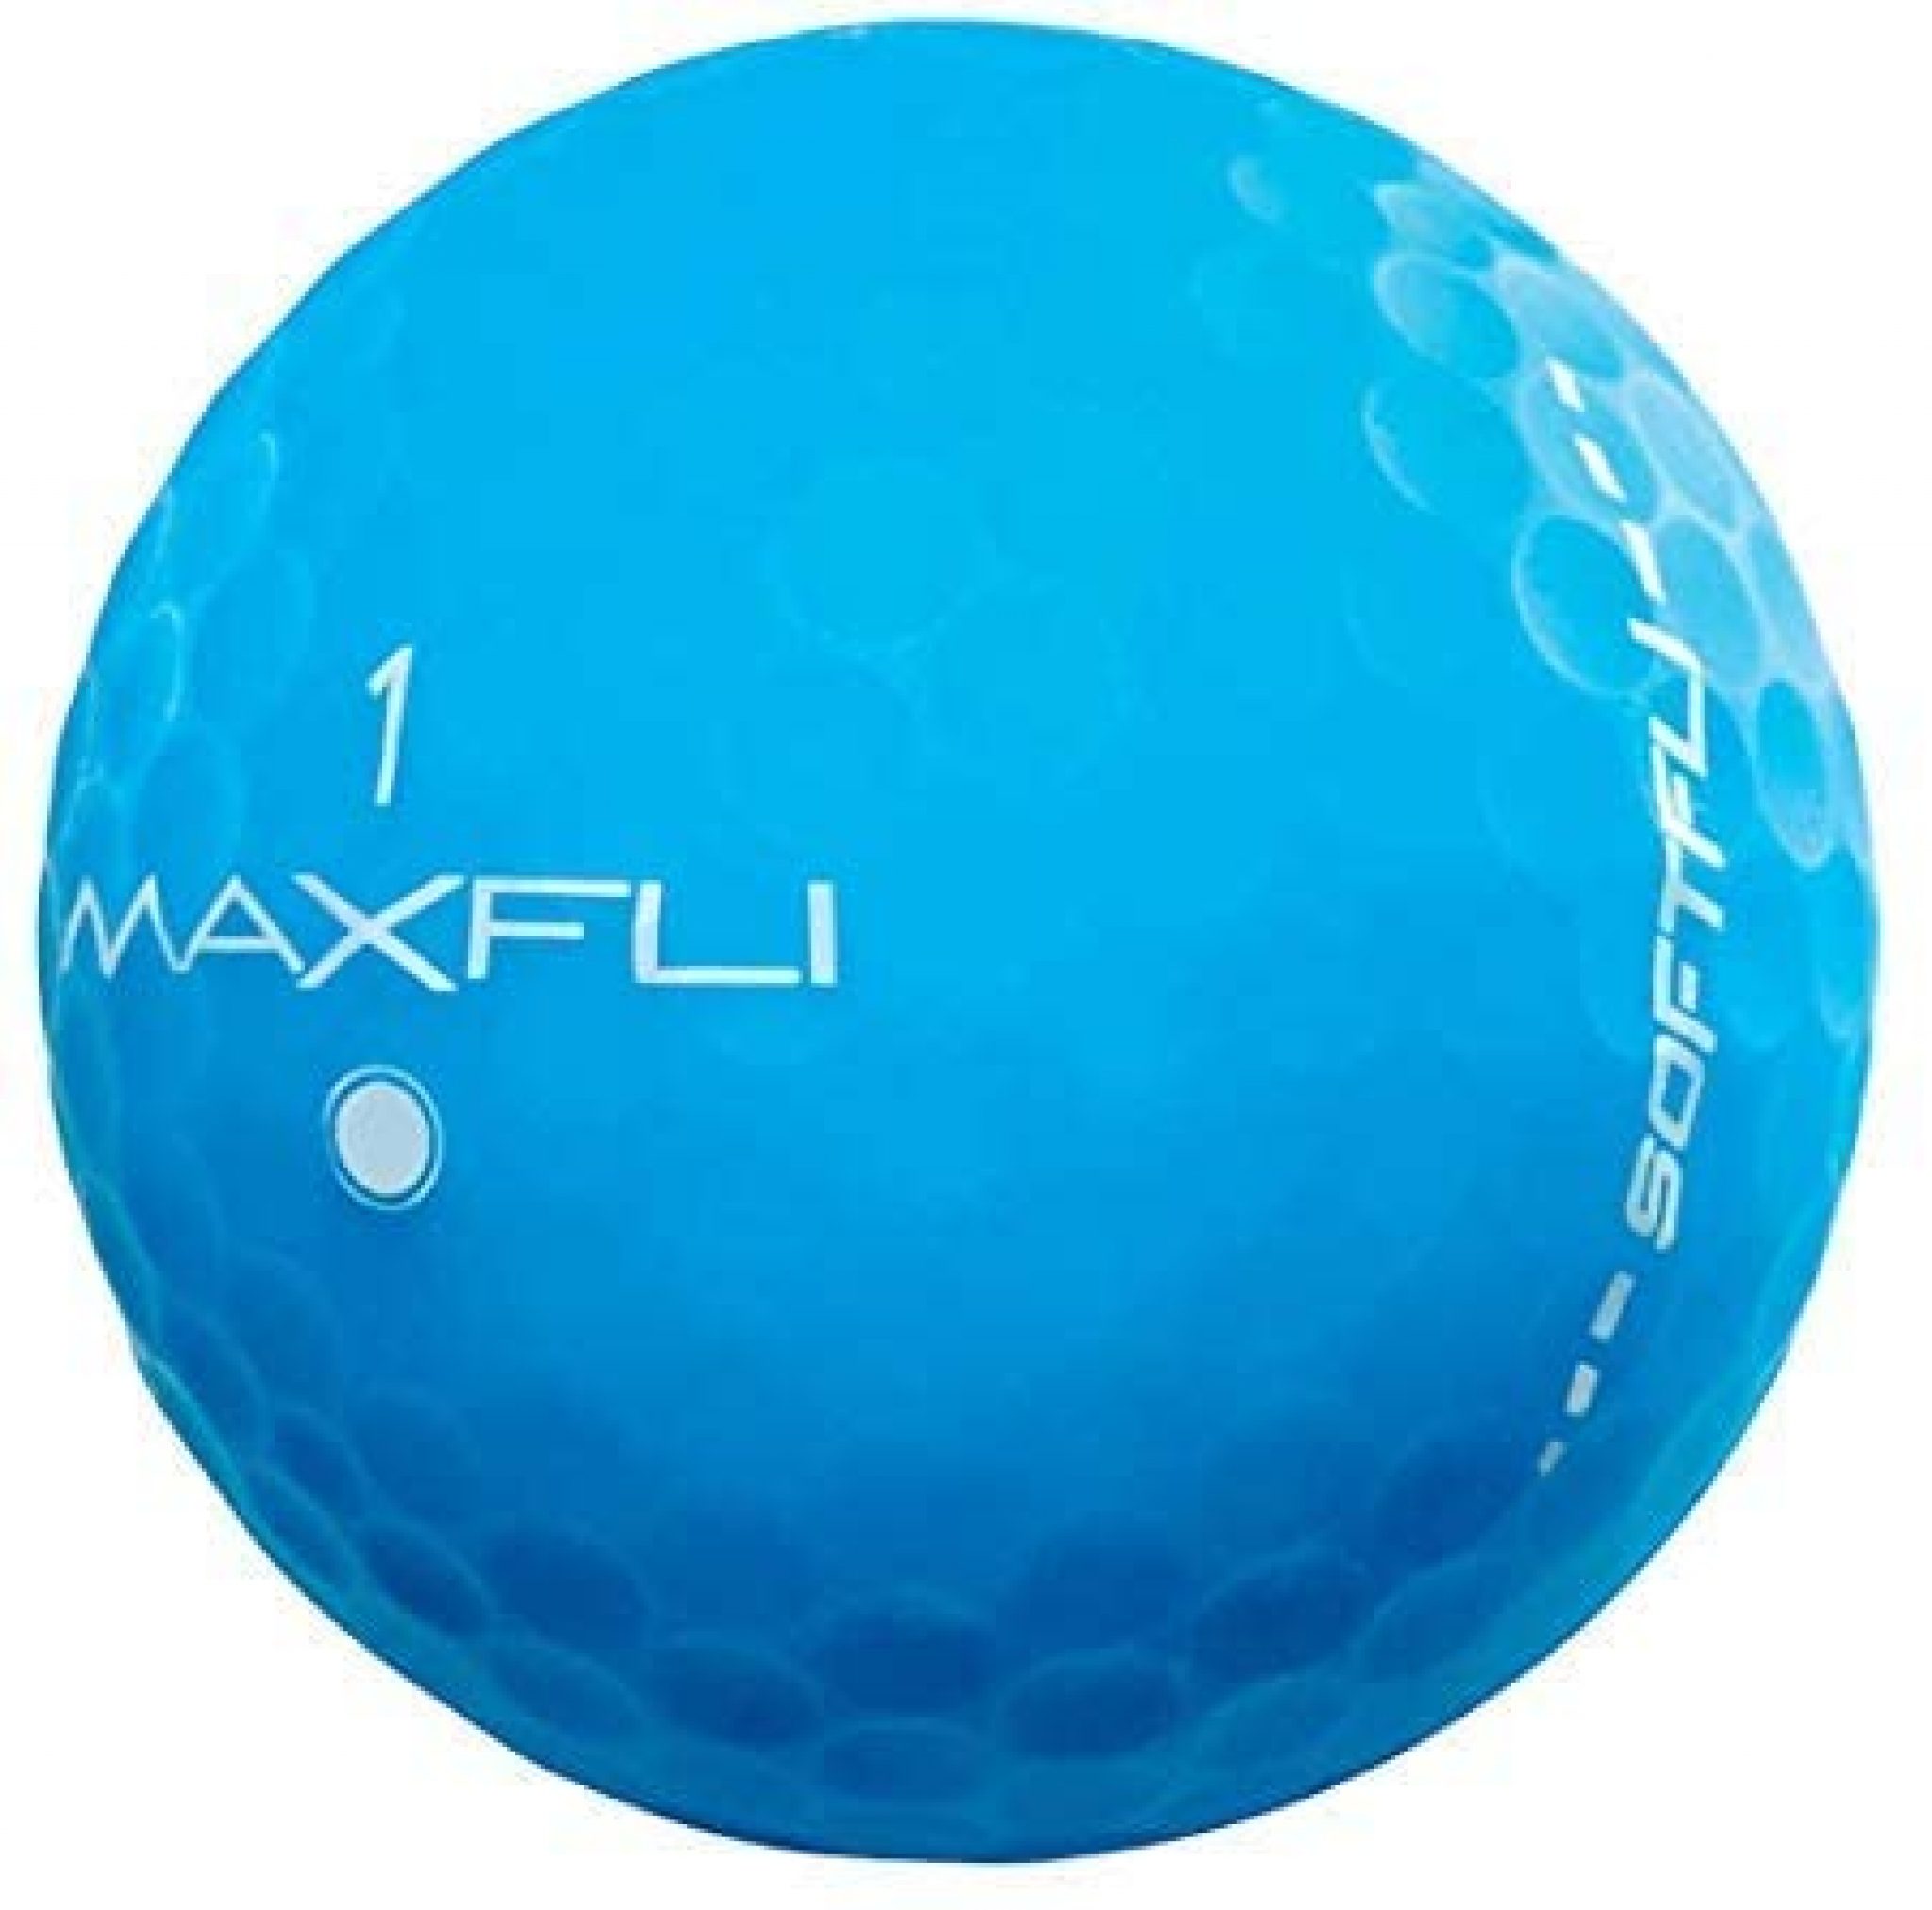 Maxfli SoftFli Matte Golf Balls Longer Straight Distance Soft Feel